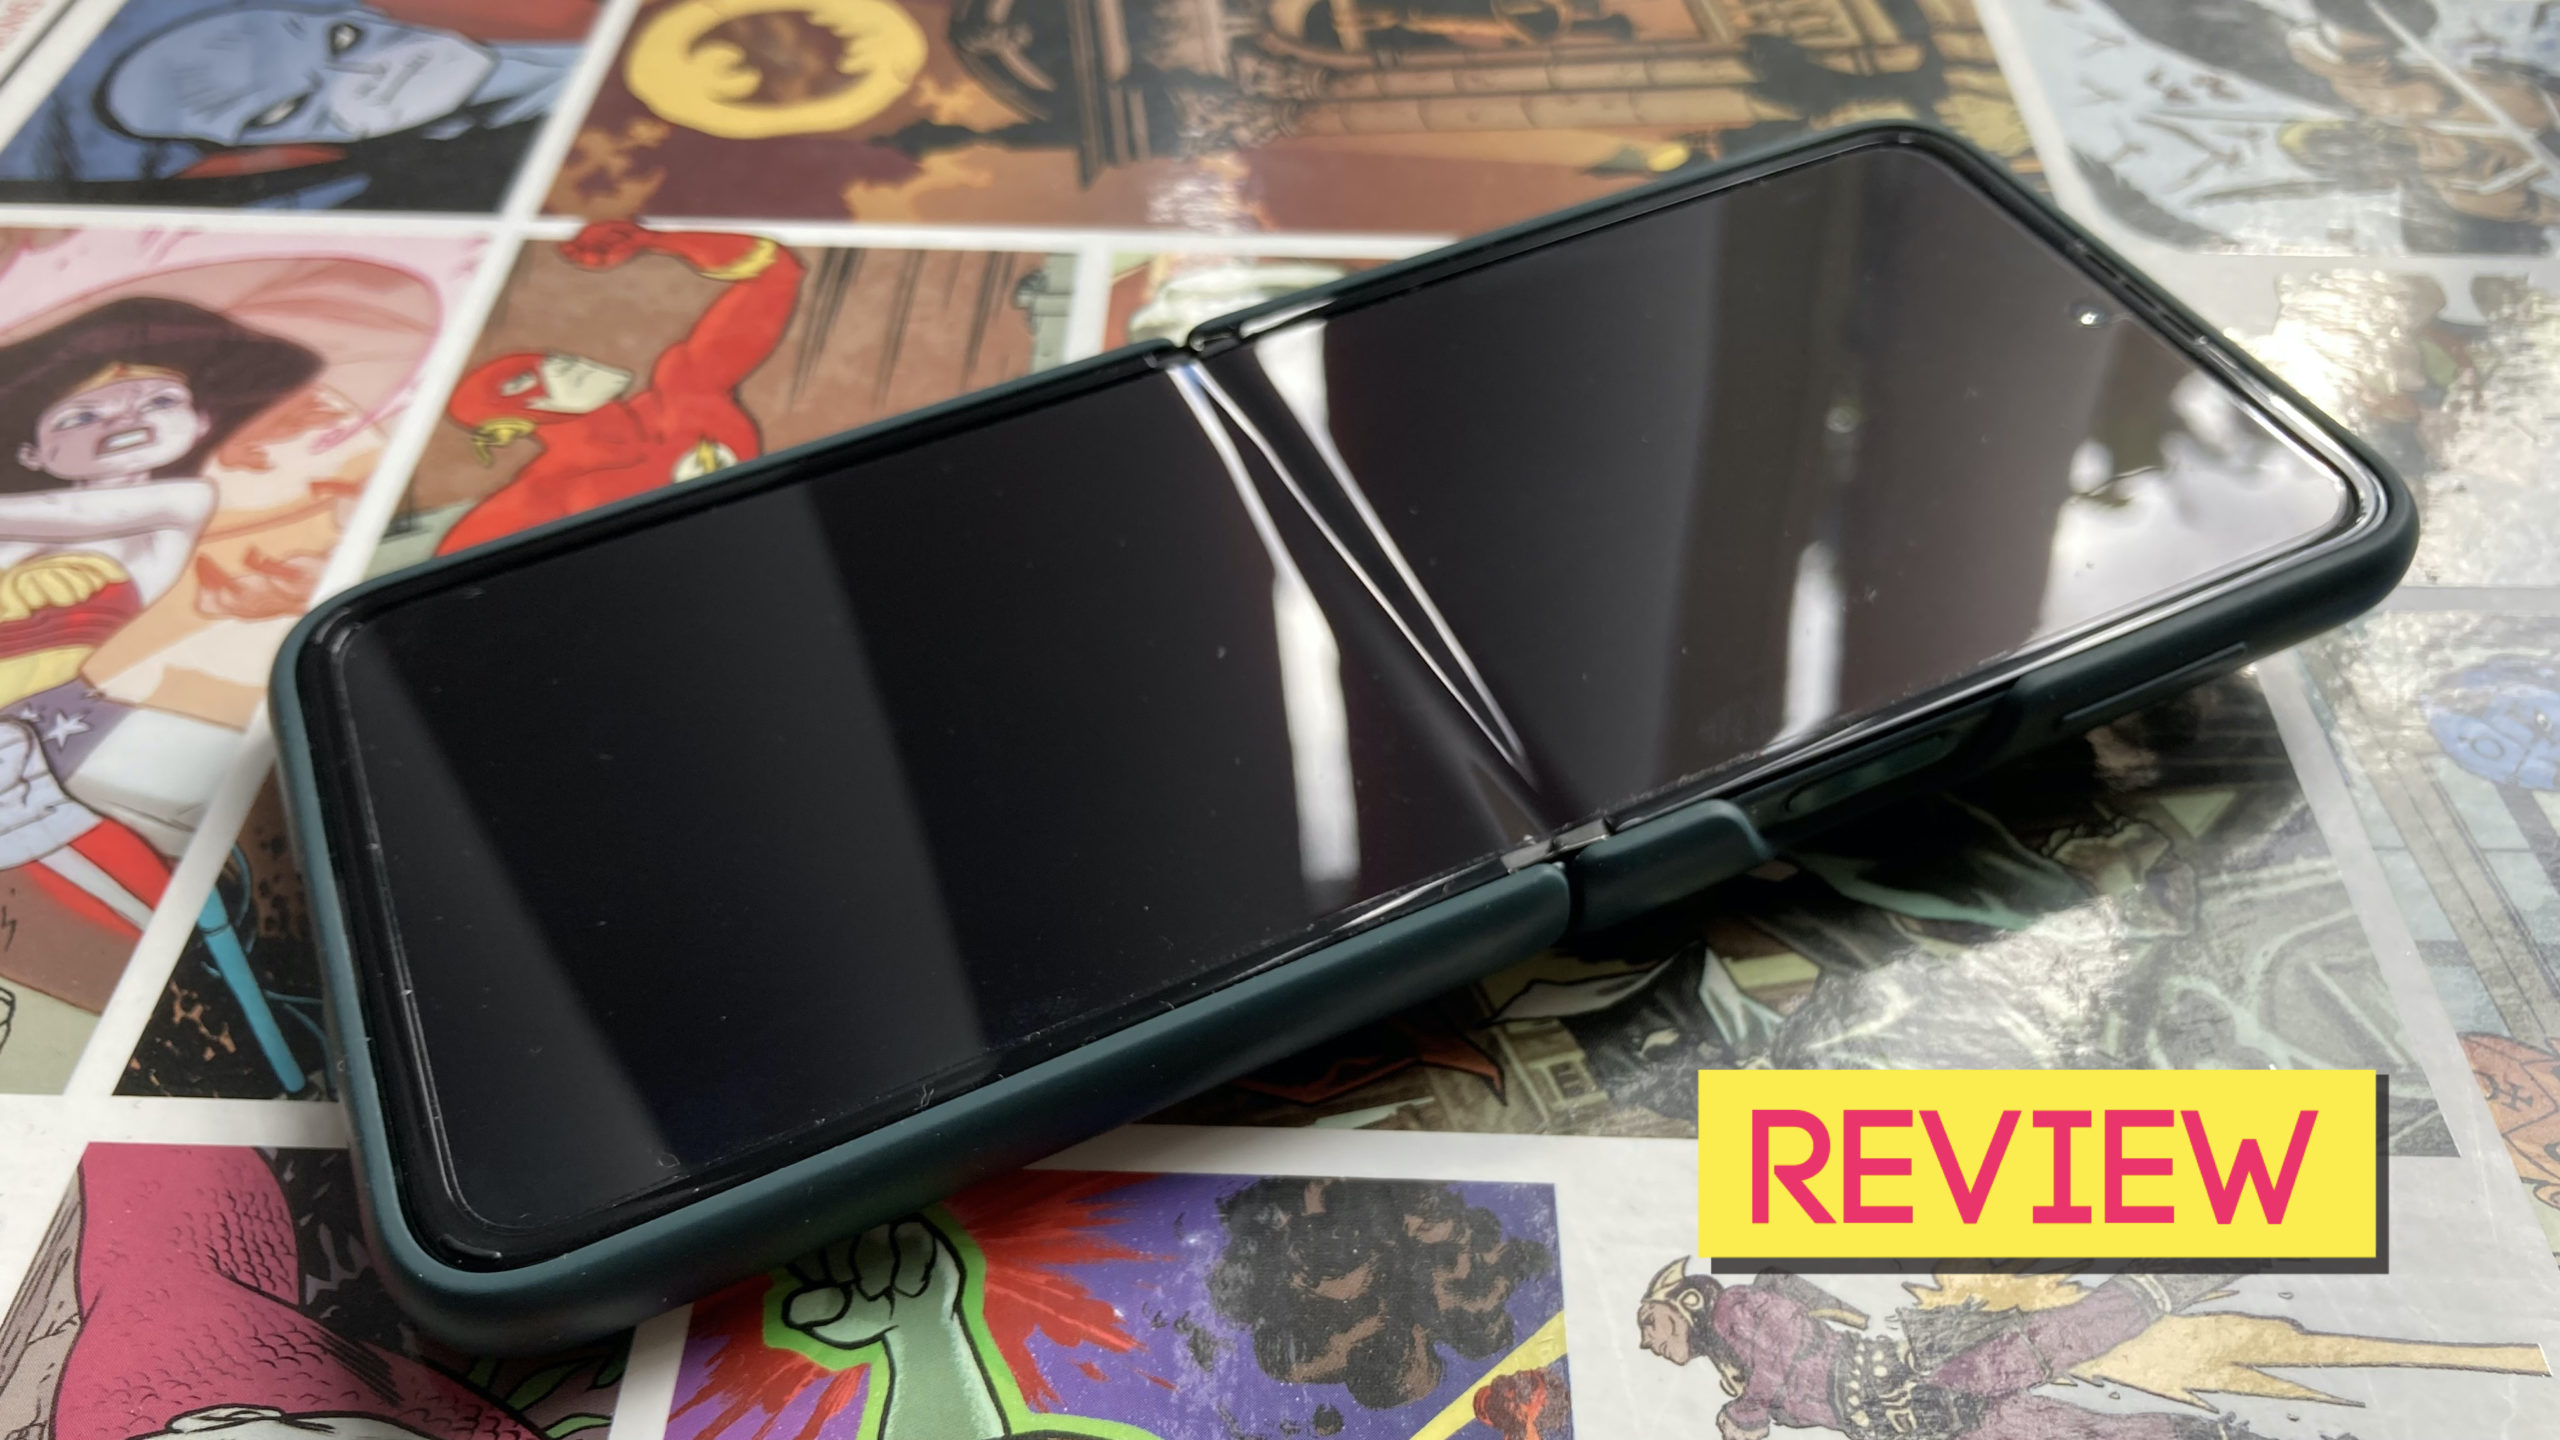 Samsung Galaxy Z Flip 3 review